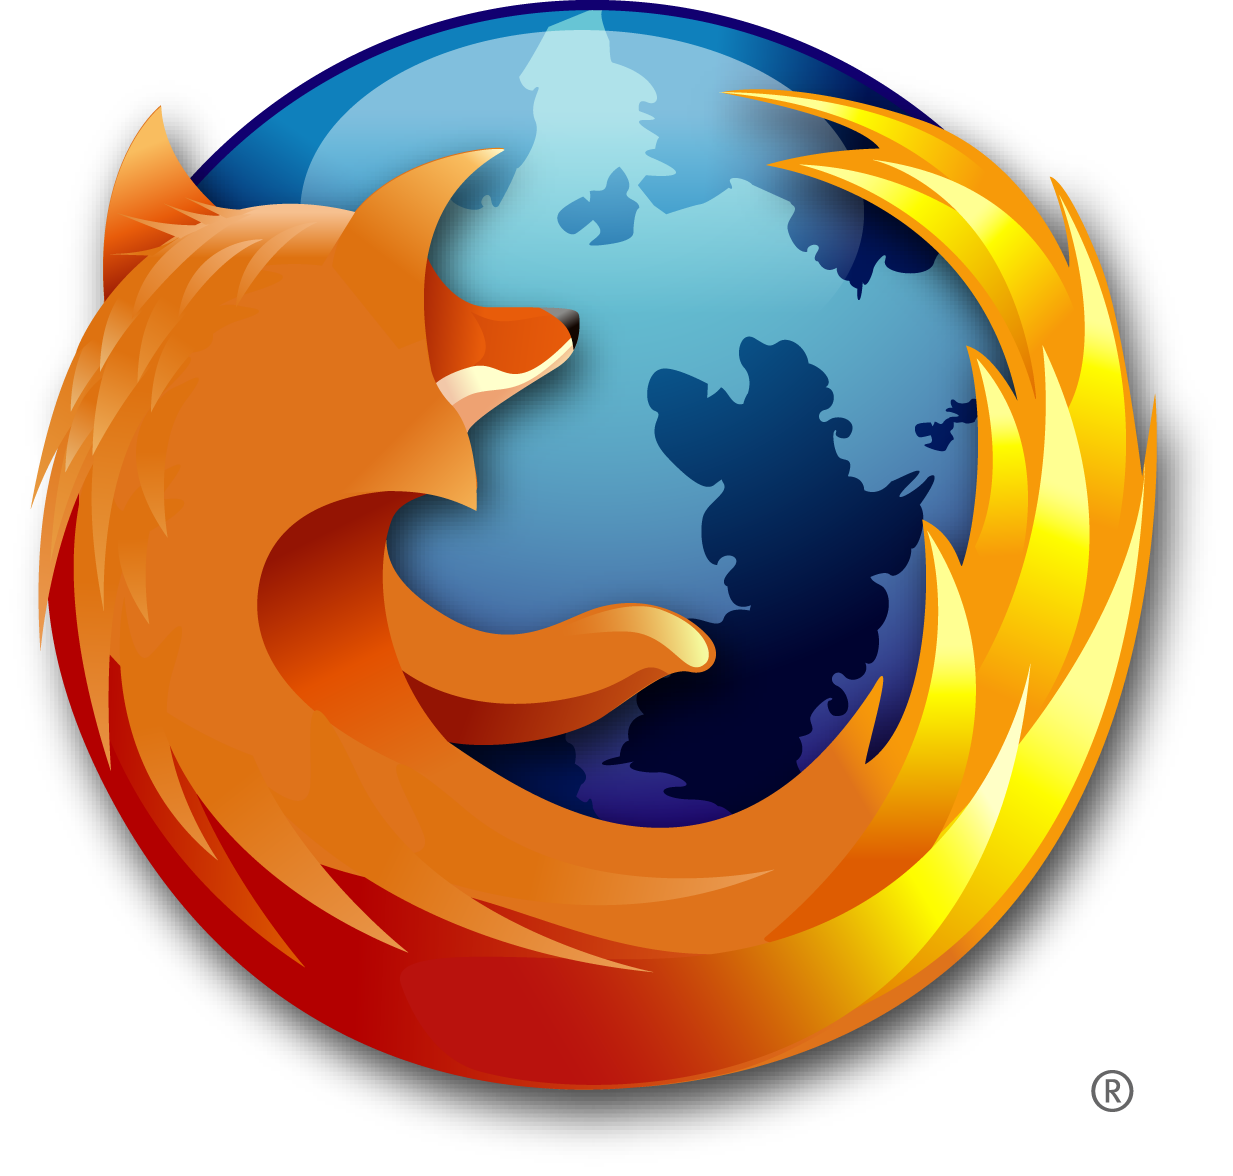 Use Firefox